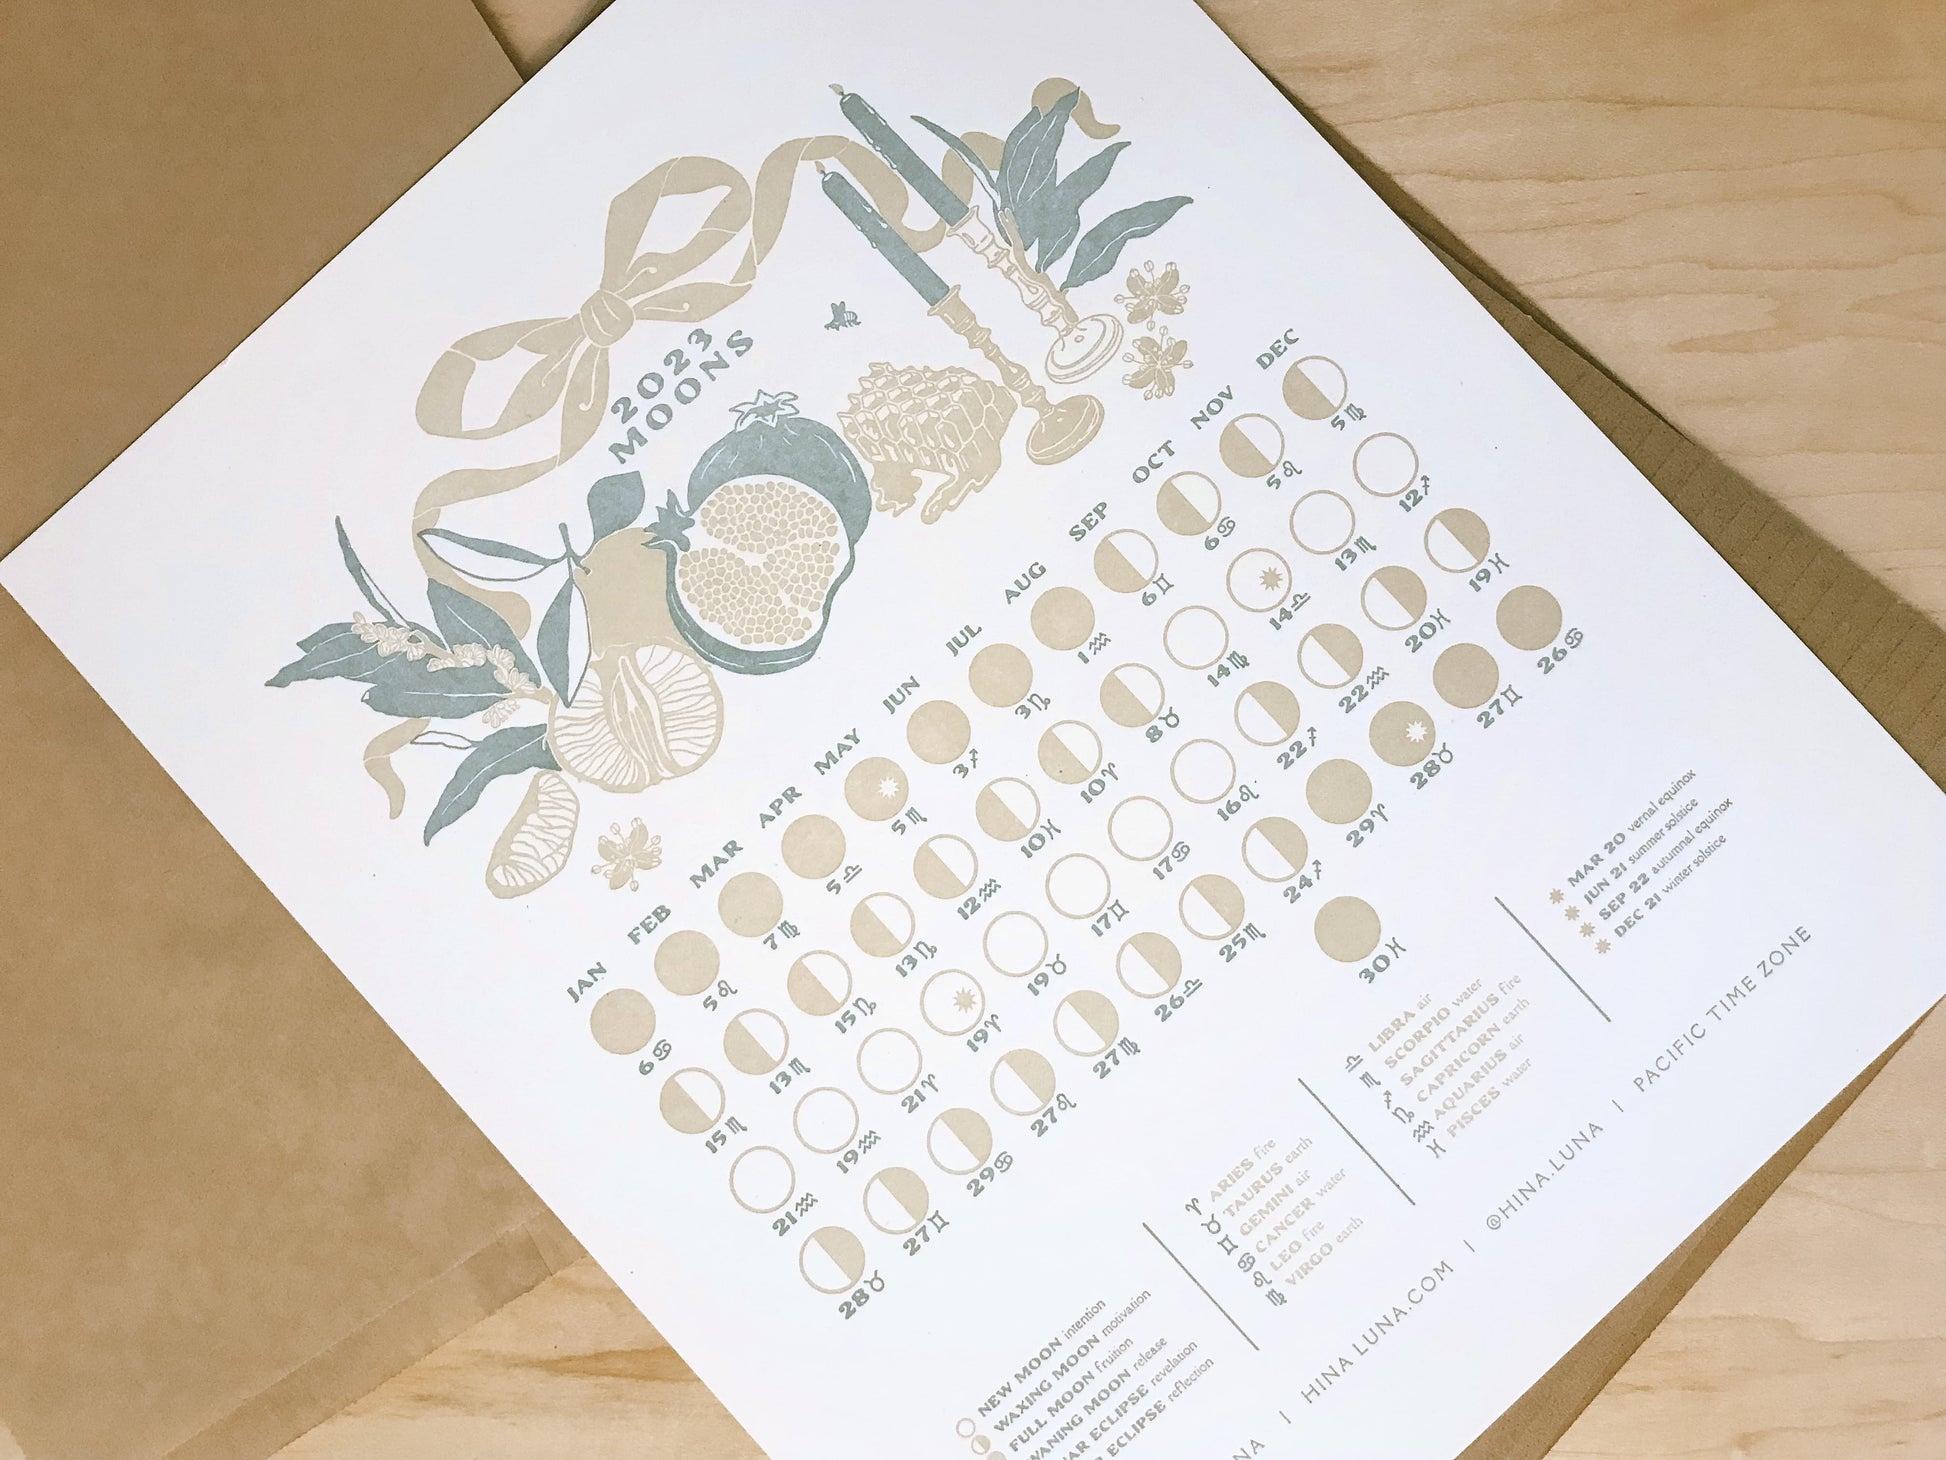 Hina Luna's letterpress printed moon calendar for 2023.